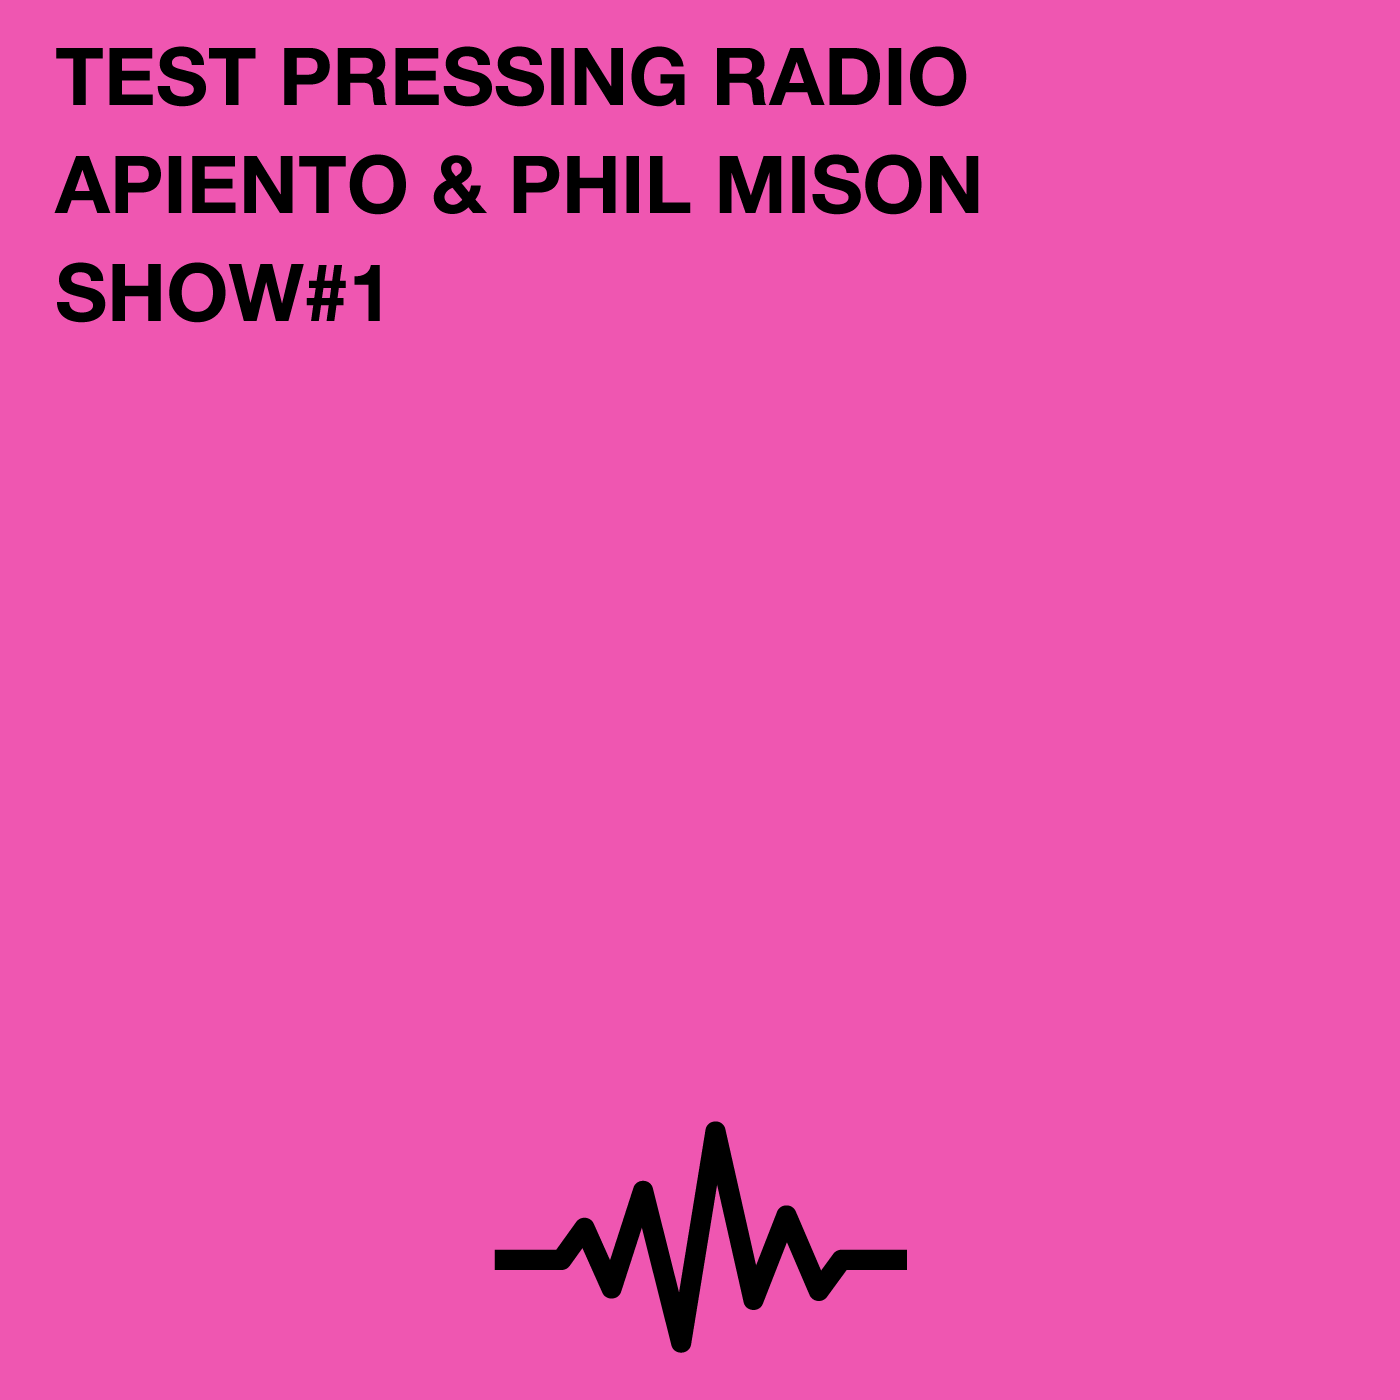 Test Pressing, radio, Phil Mison, Apiento